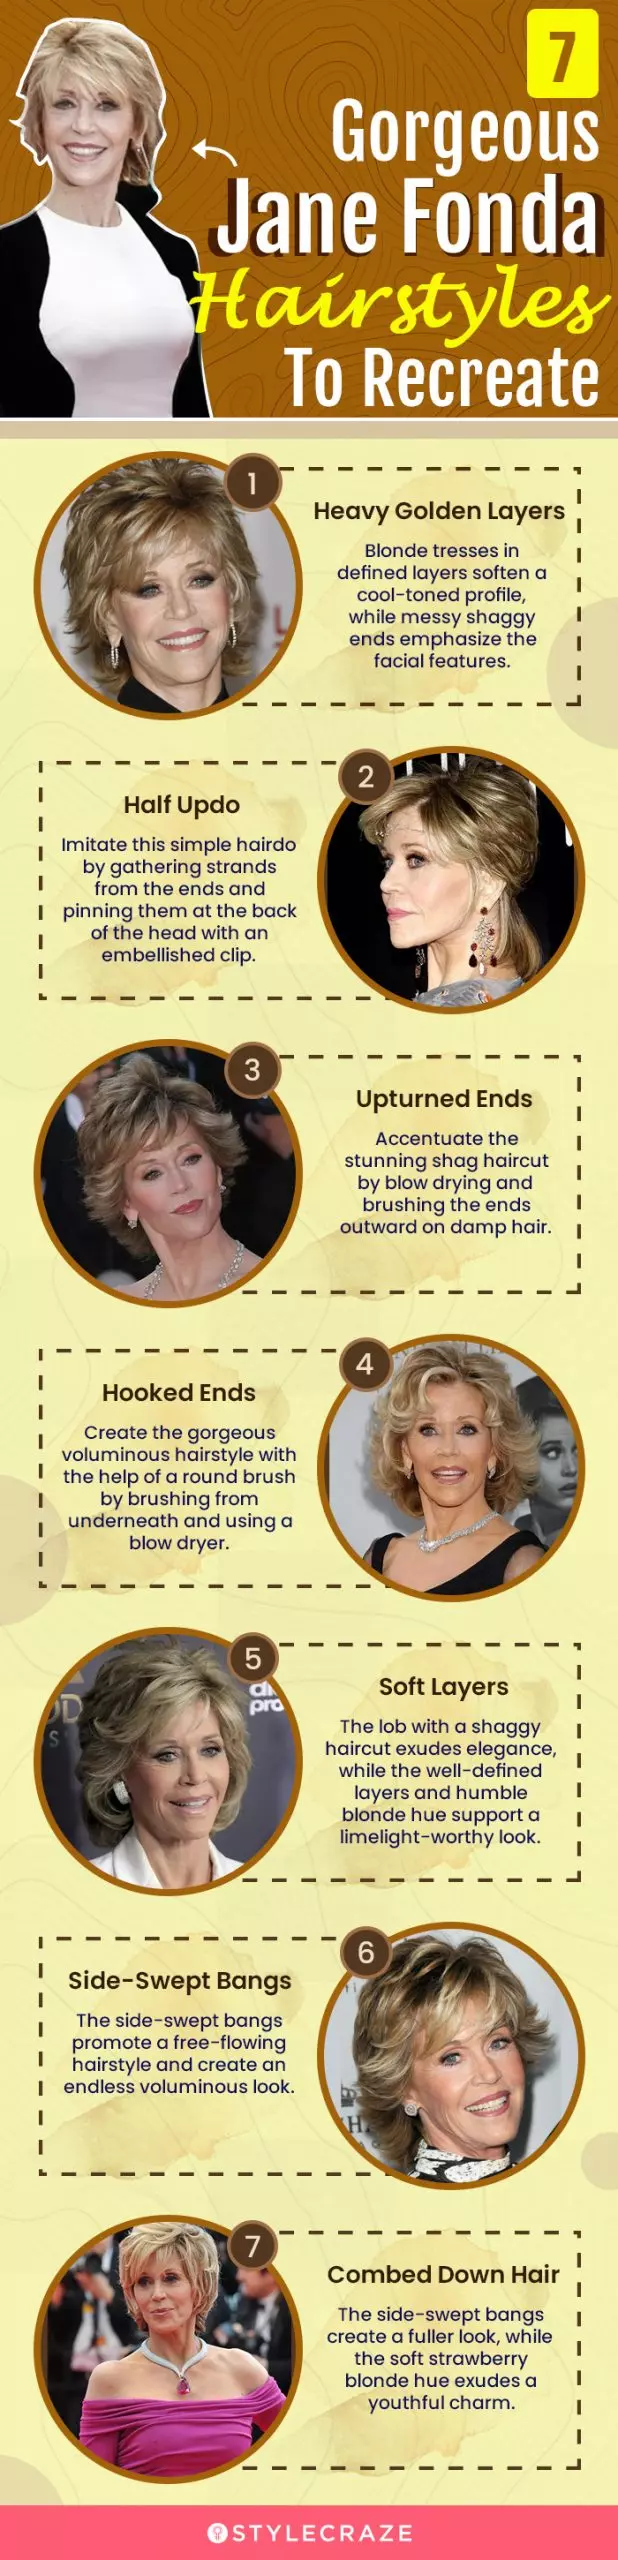 7 gorgeous jane fonda hairstyles to recreate (infographic)